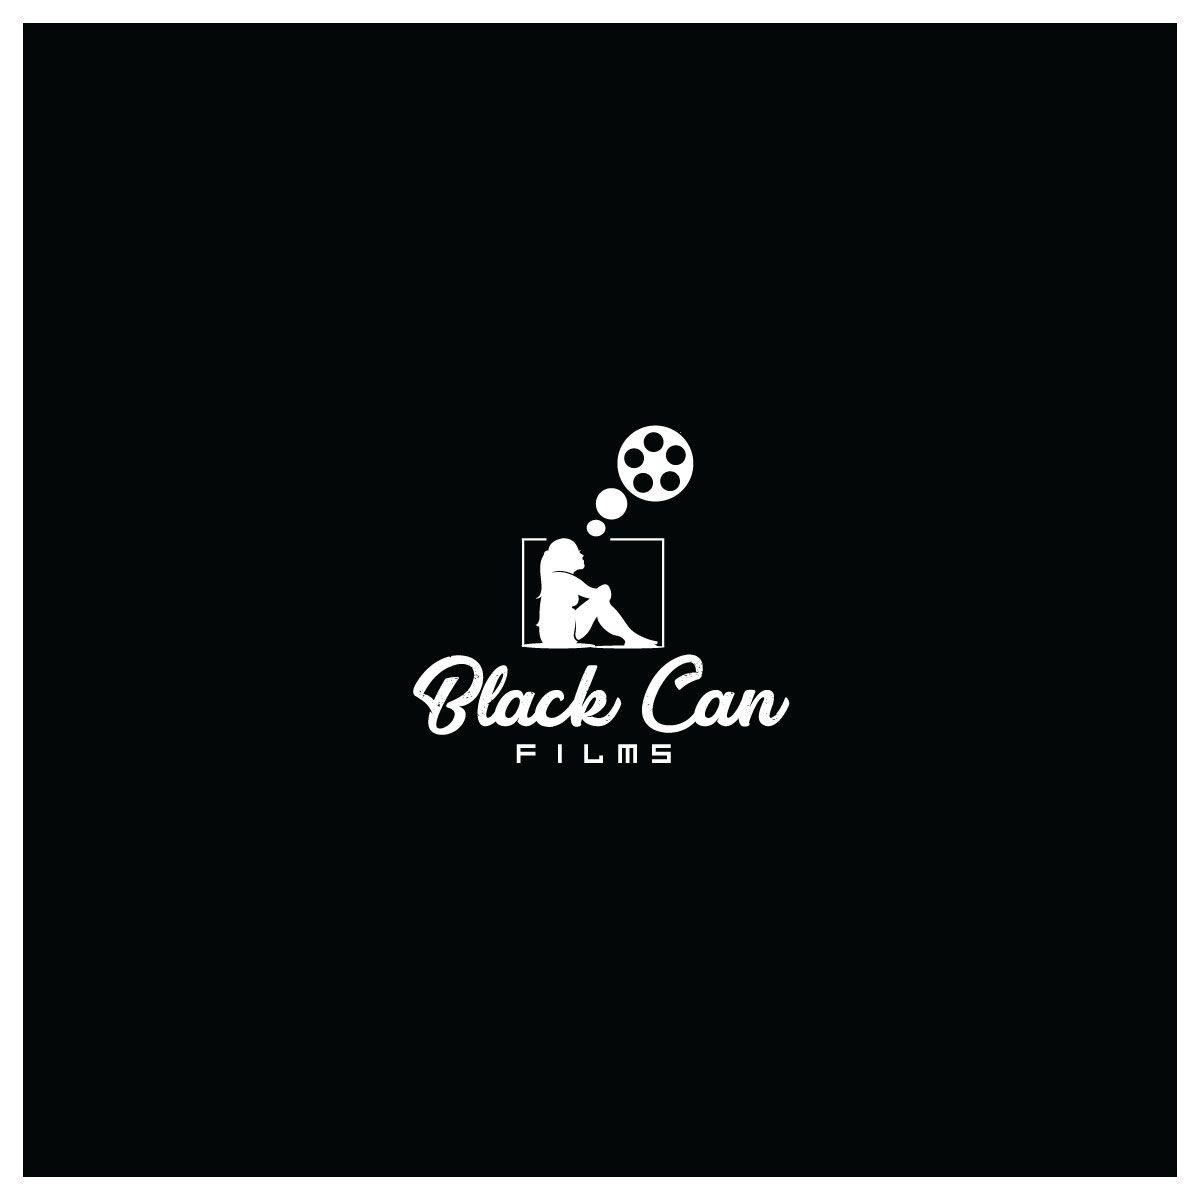 Films Logo - Modern, Bold, Film Production Logo Design for Black Can Films by ...